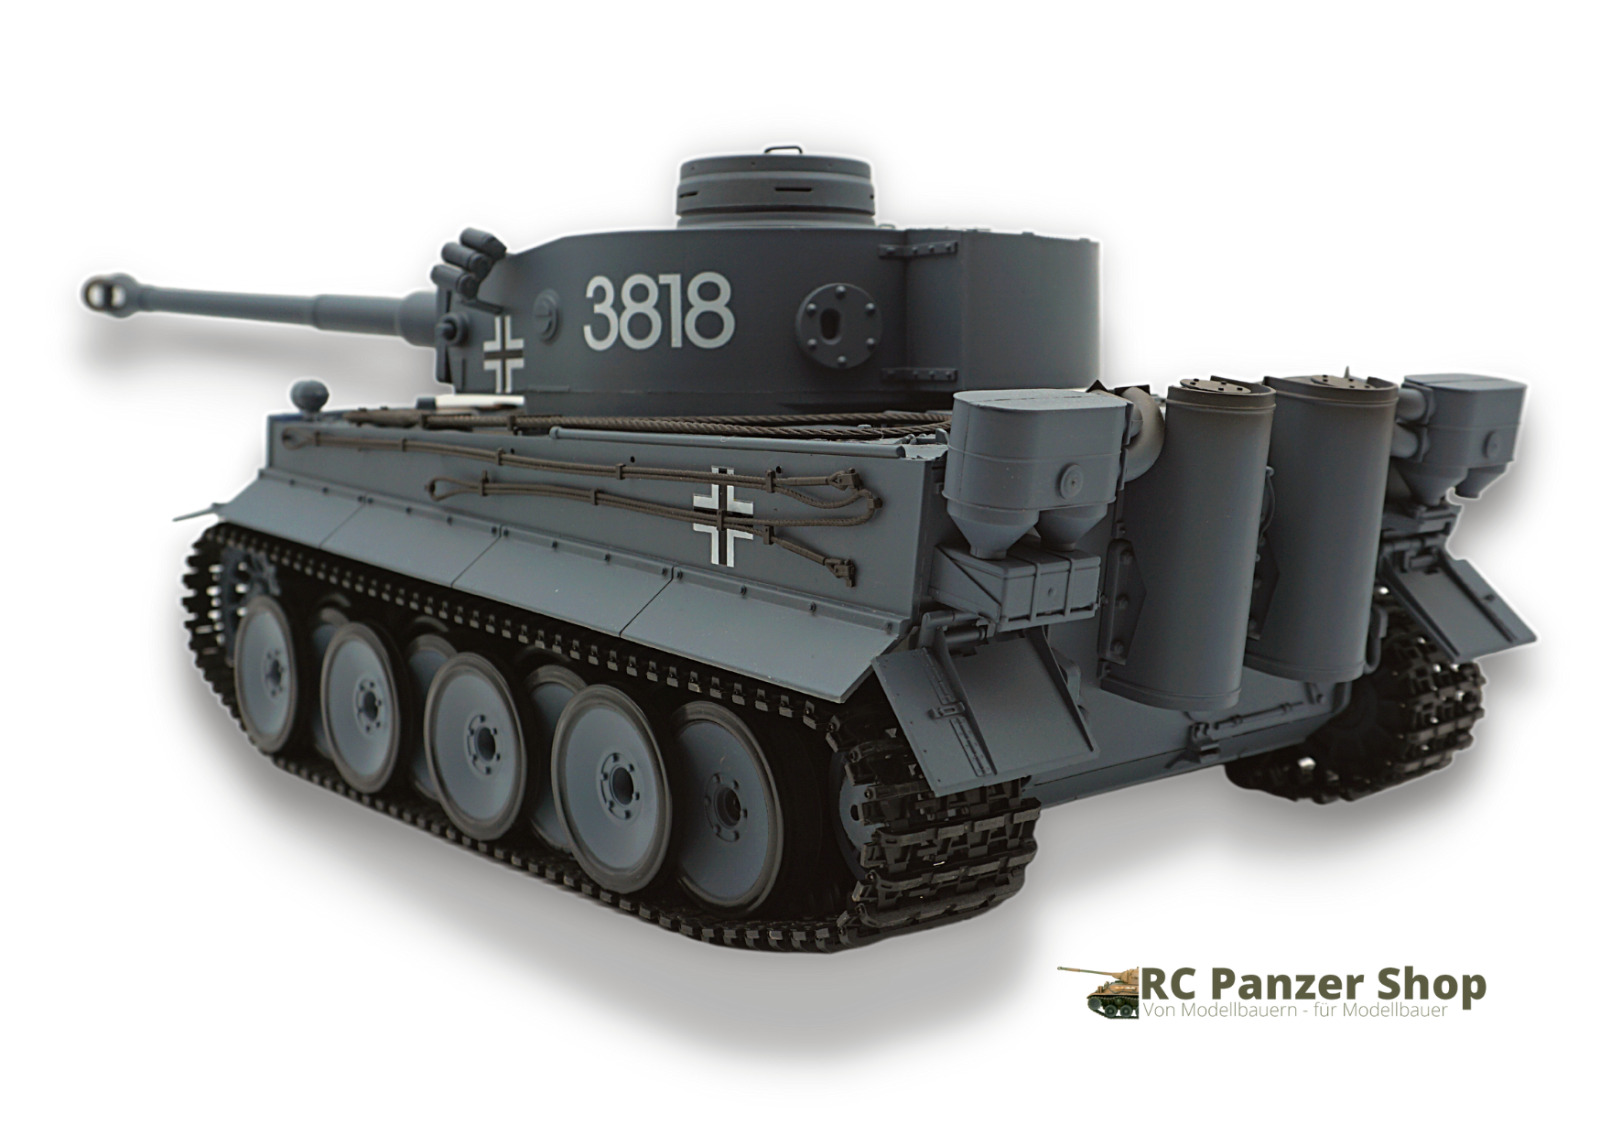 RC Panzer Tiger 1 3818 Upgrade Edition Heng Long 116 Version 7 2,4 Ghz